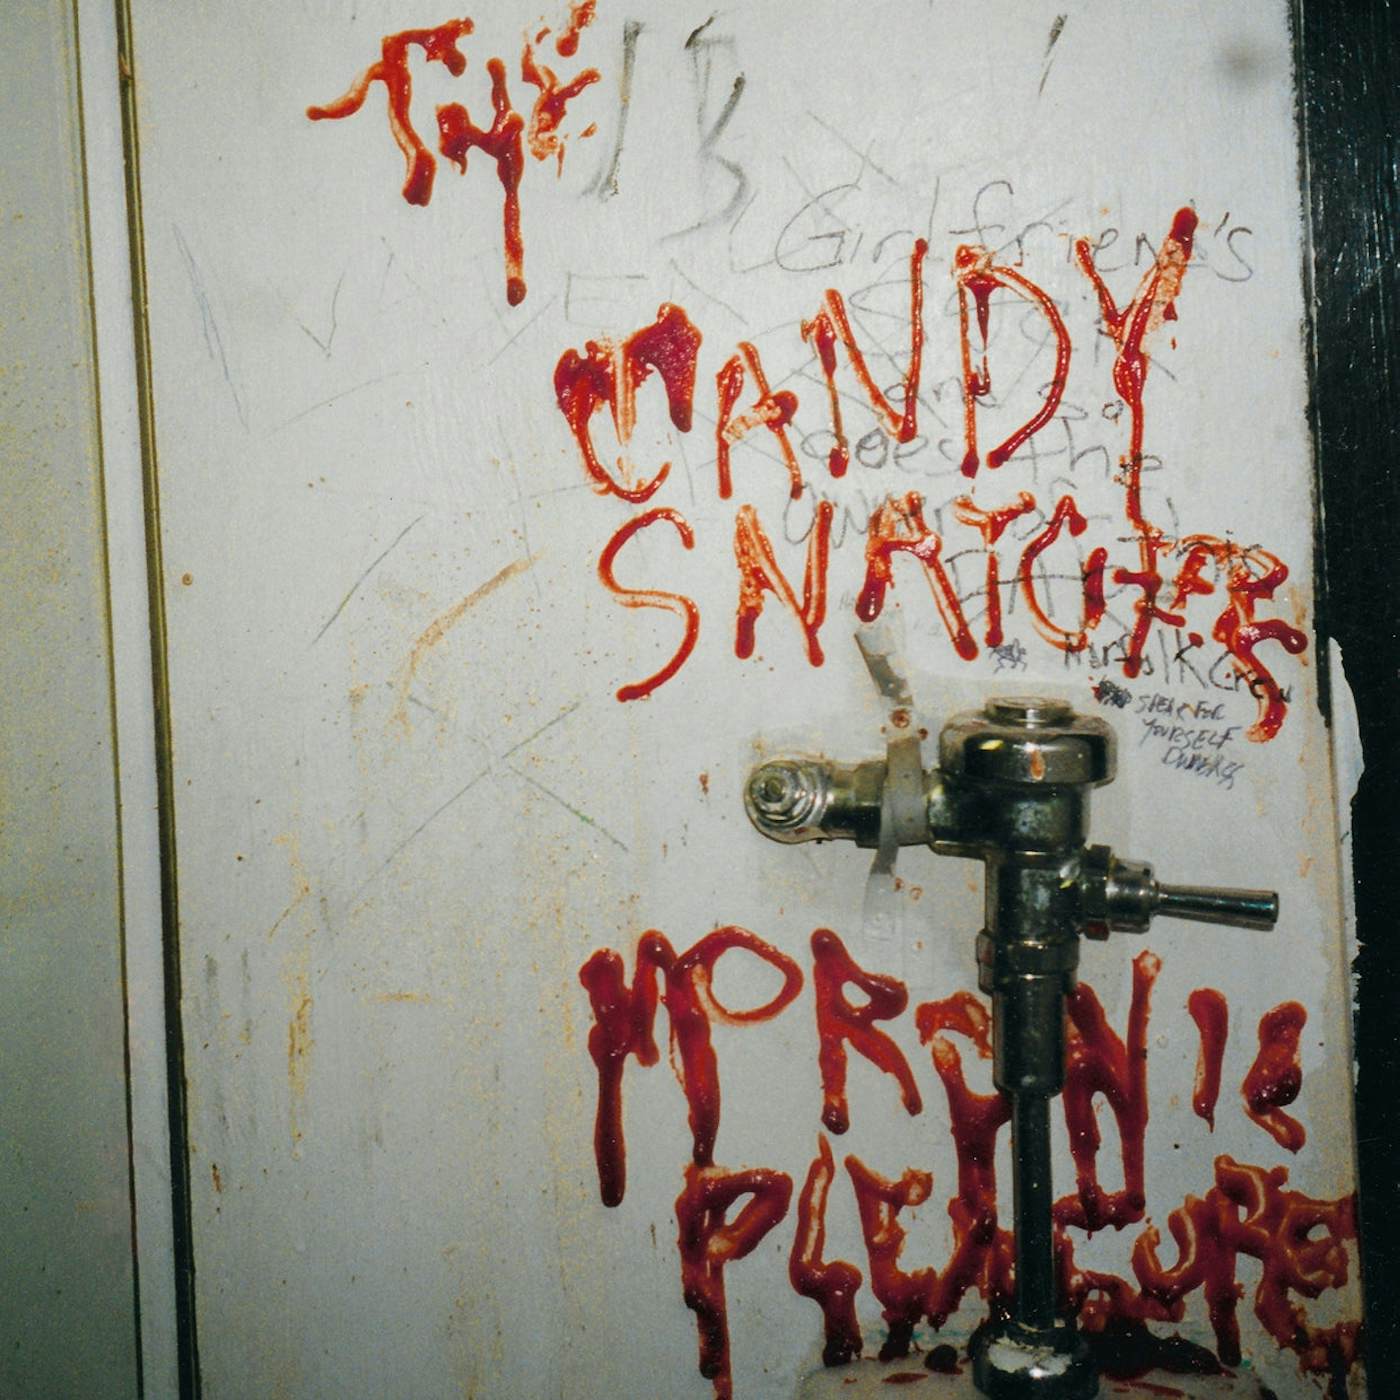 The Candy Snatchers LP - Moronic Pleasures (Vinyl)